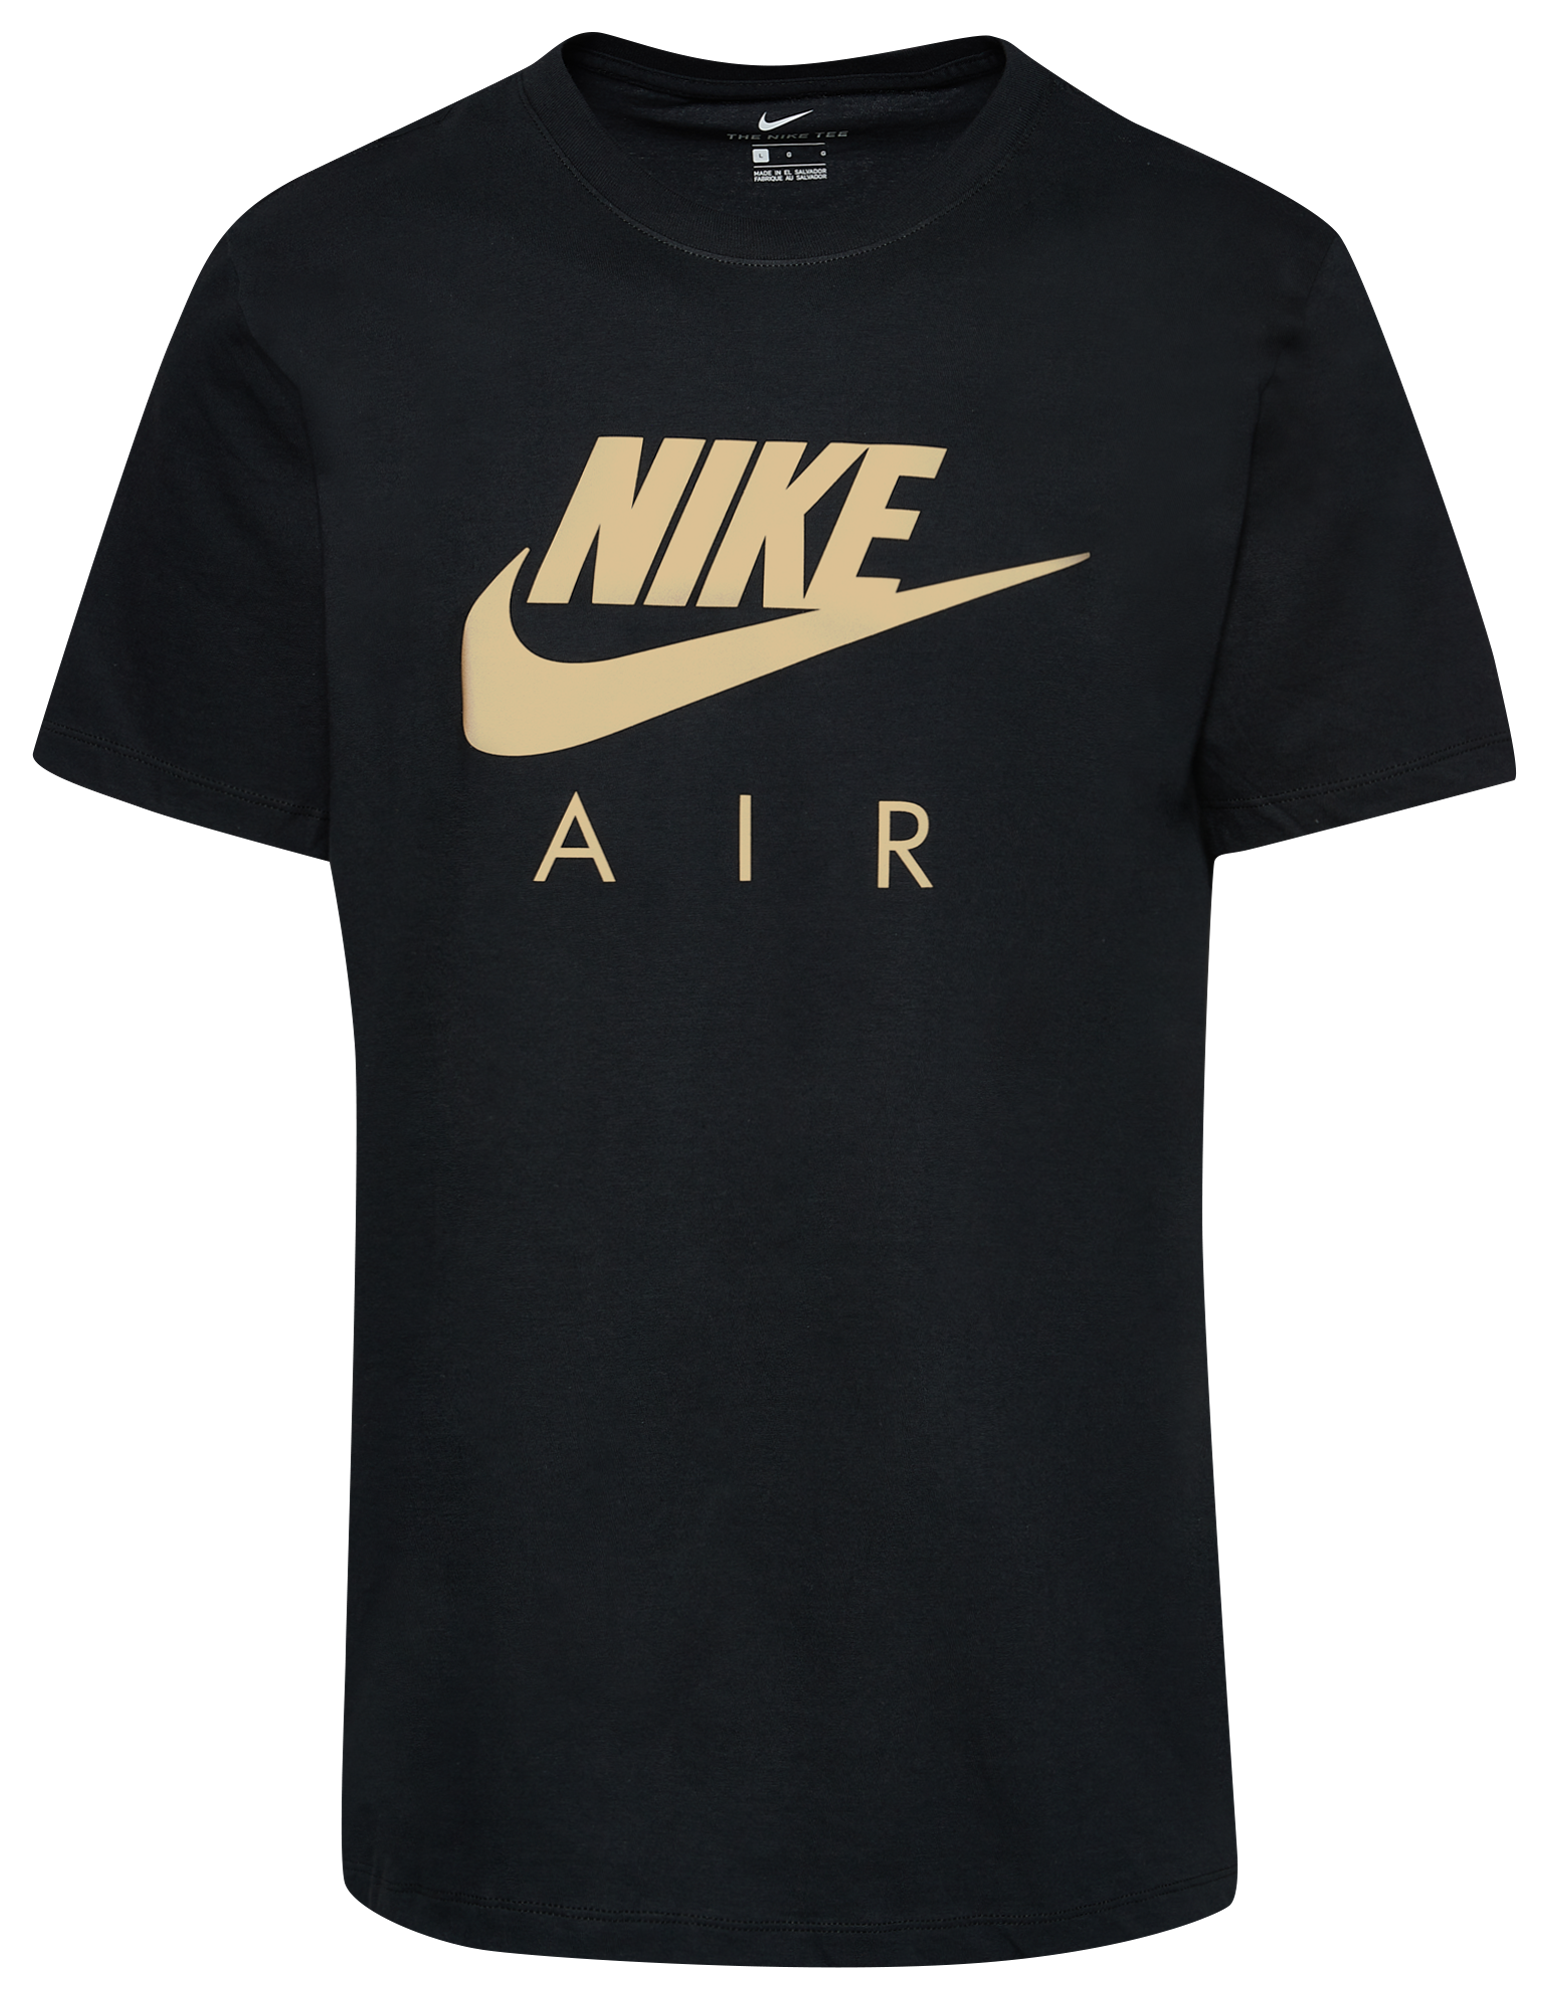 Novela de suspenso formar tira Nike Air Reflective T-Shirt | Foot Locker